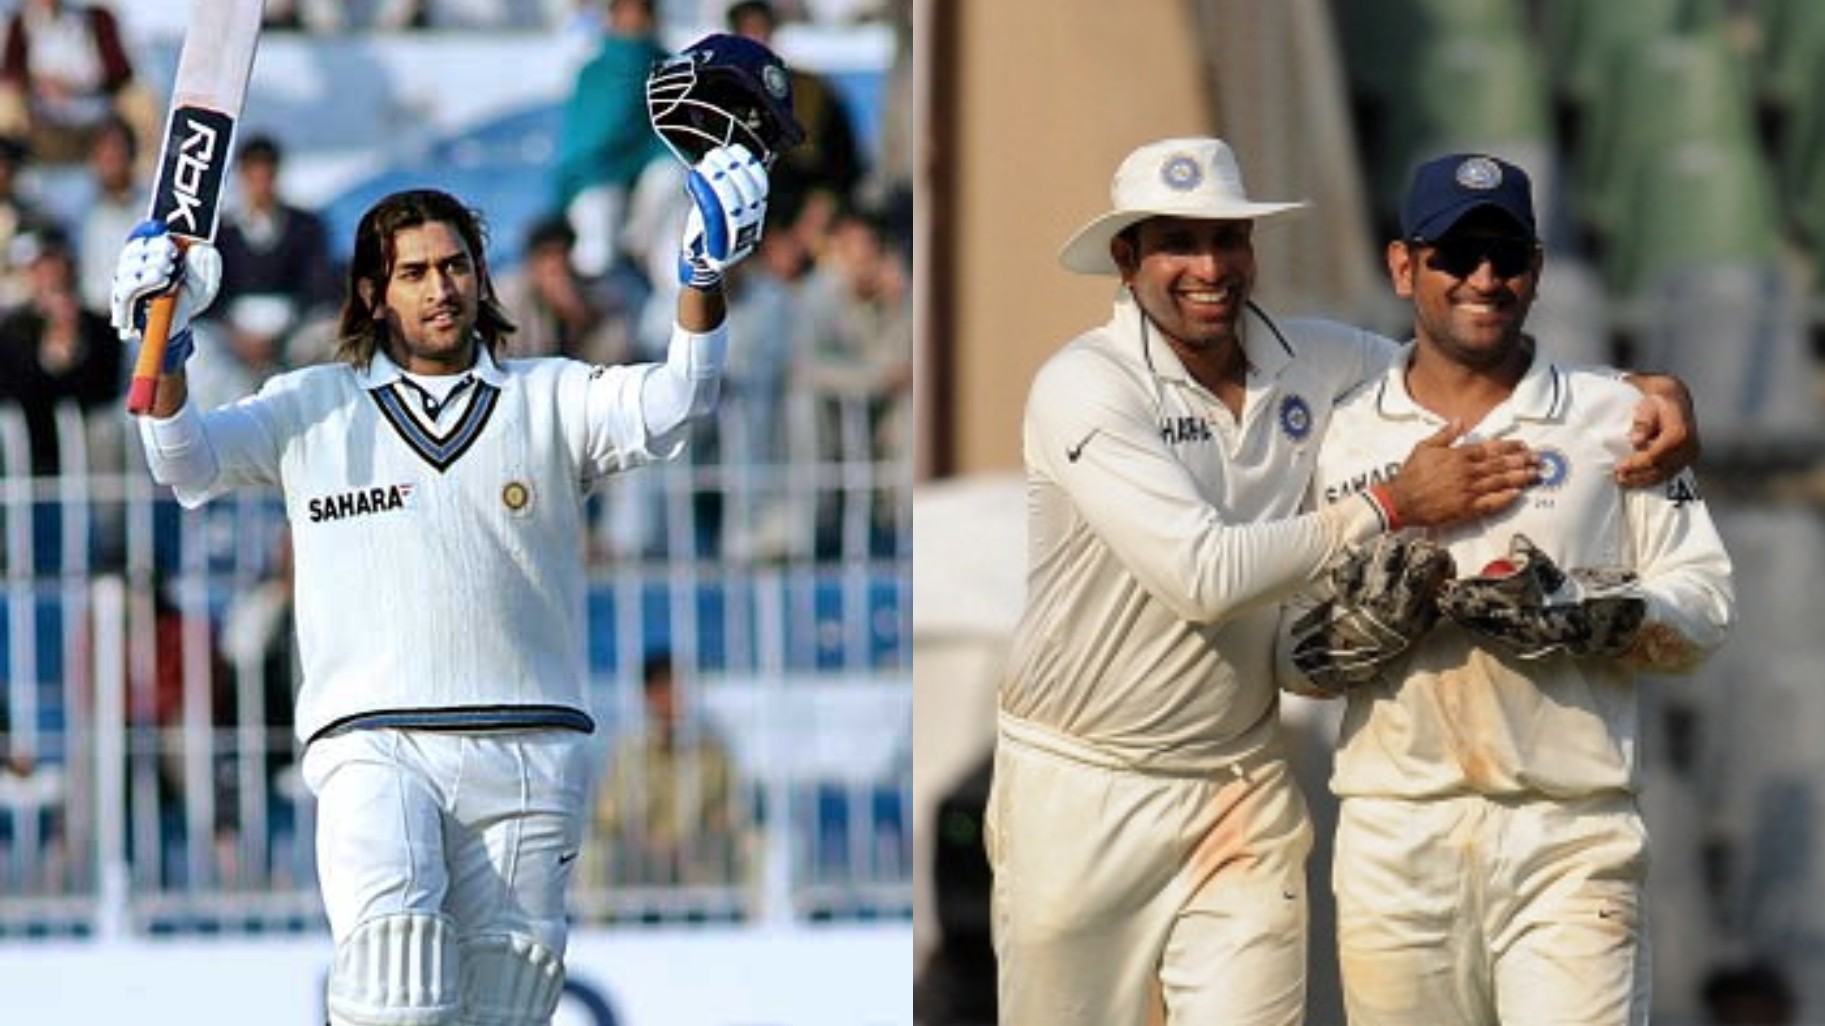 “Maine Test hundred mara, bas that’s it,” Laxman recalls Dhoni joking about retirement after ton against Pakistan